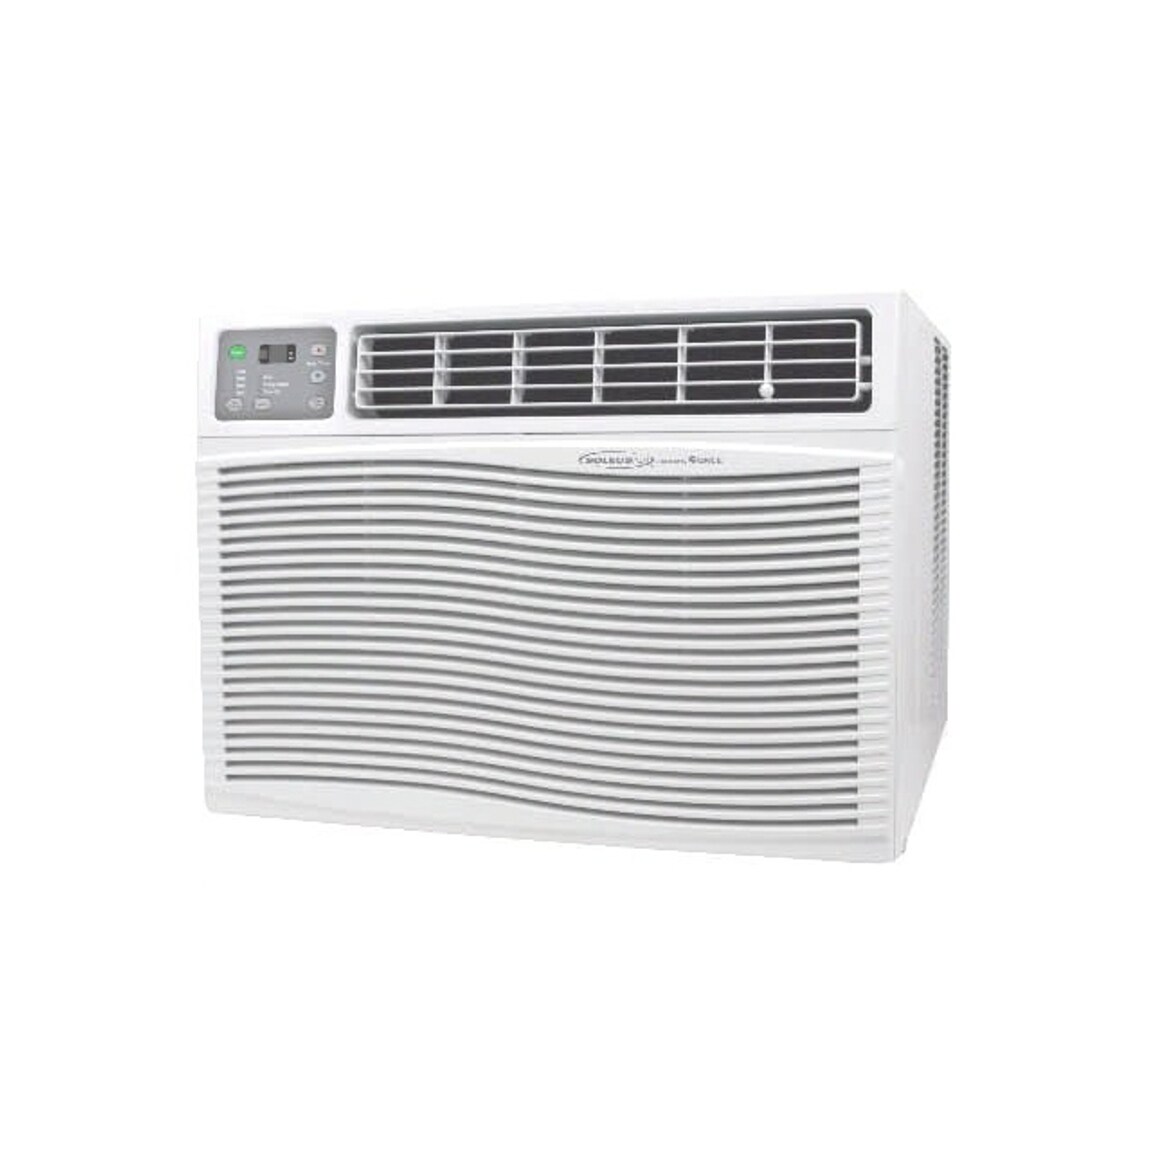 air conditioner for medium sized room